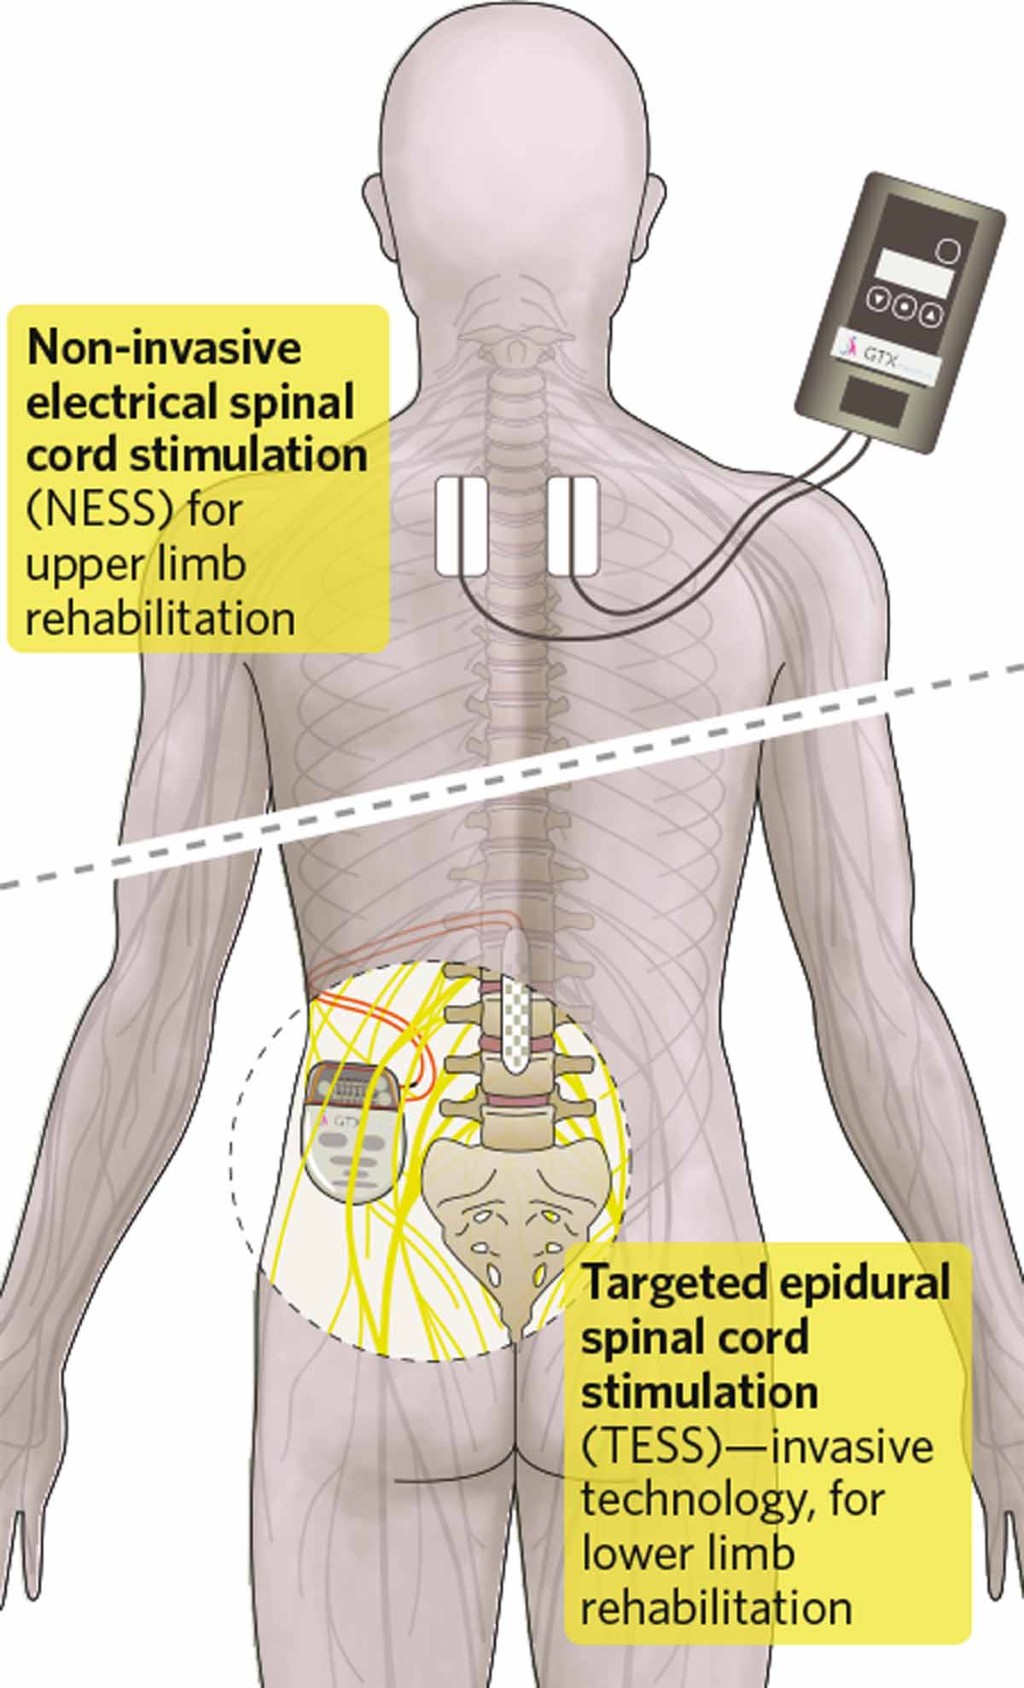 Spinal cord stimulation